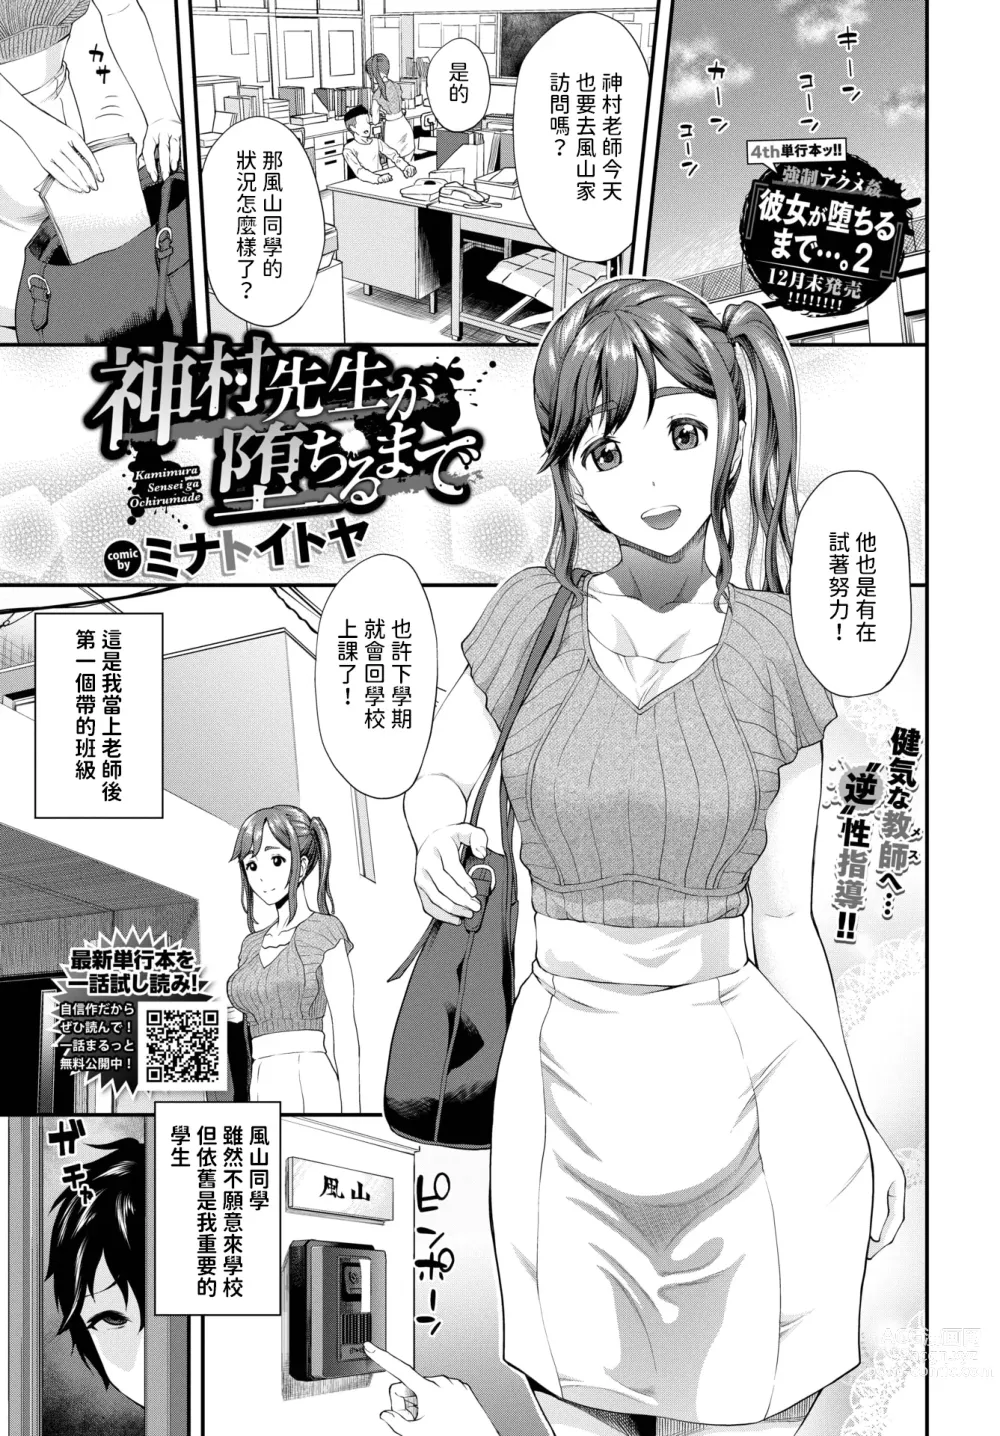 Page 1 of manga Kamimura-sensei ga Ochiru made